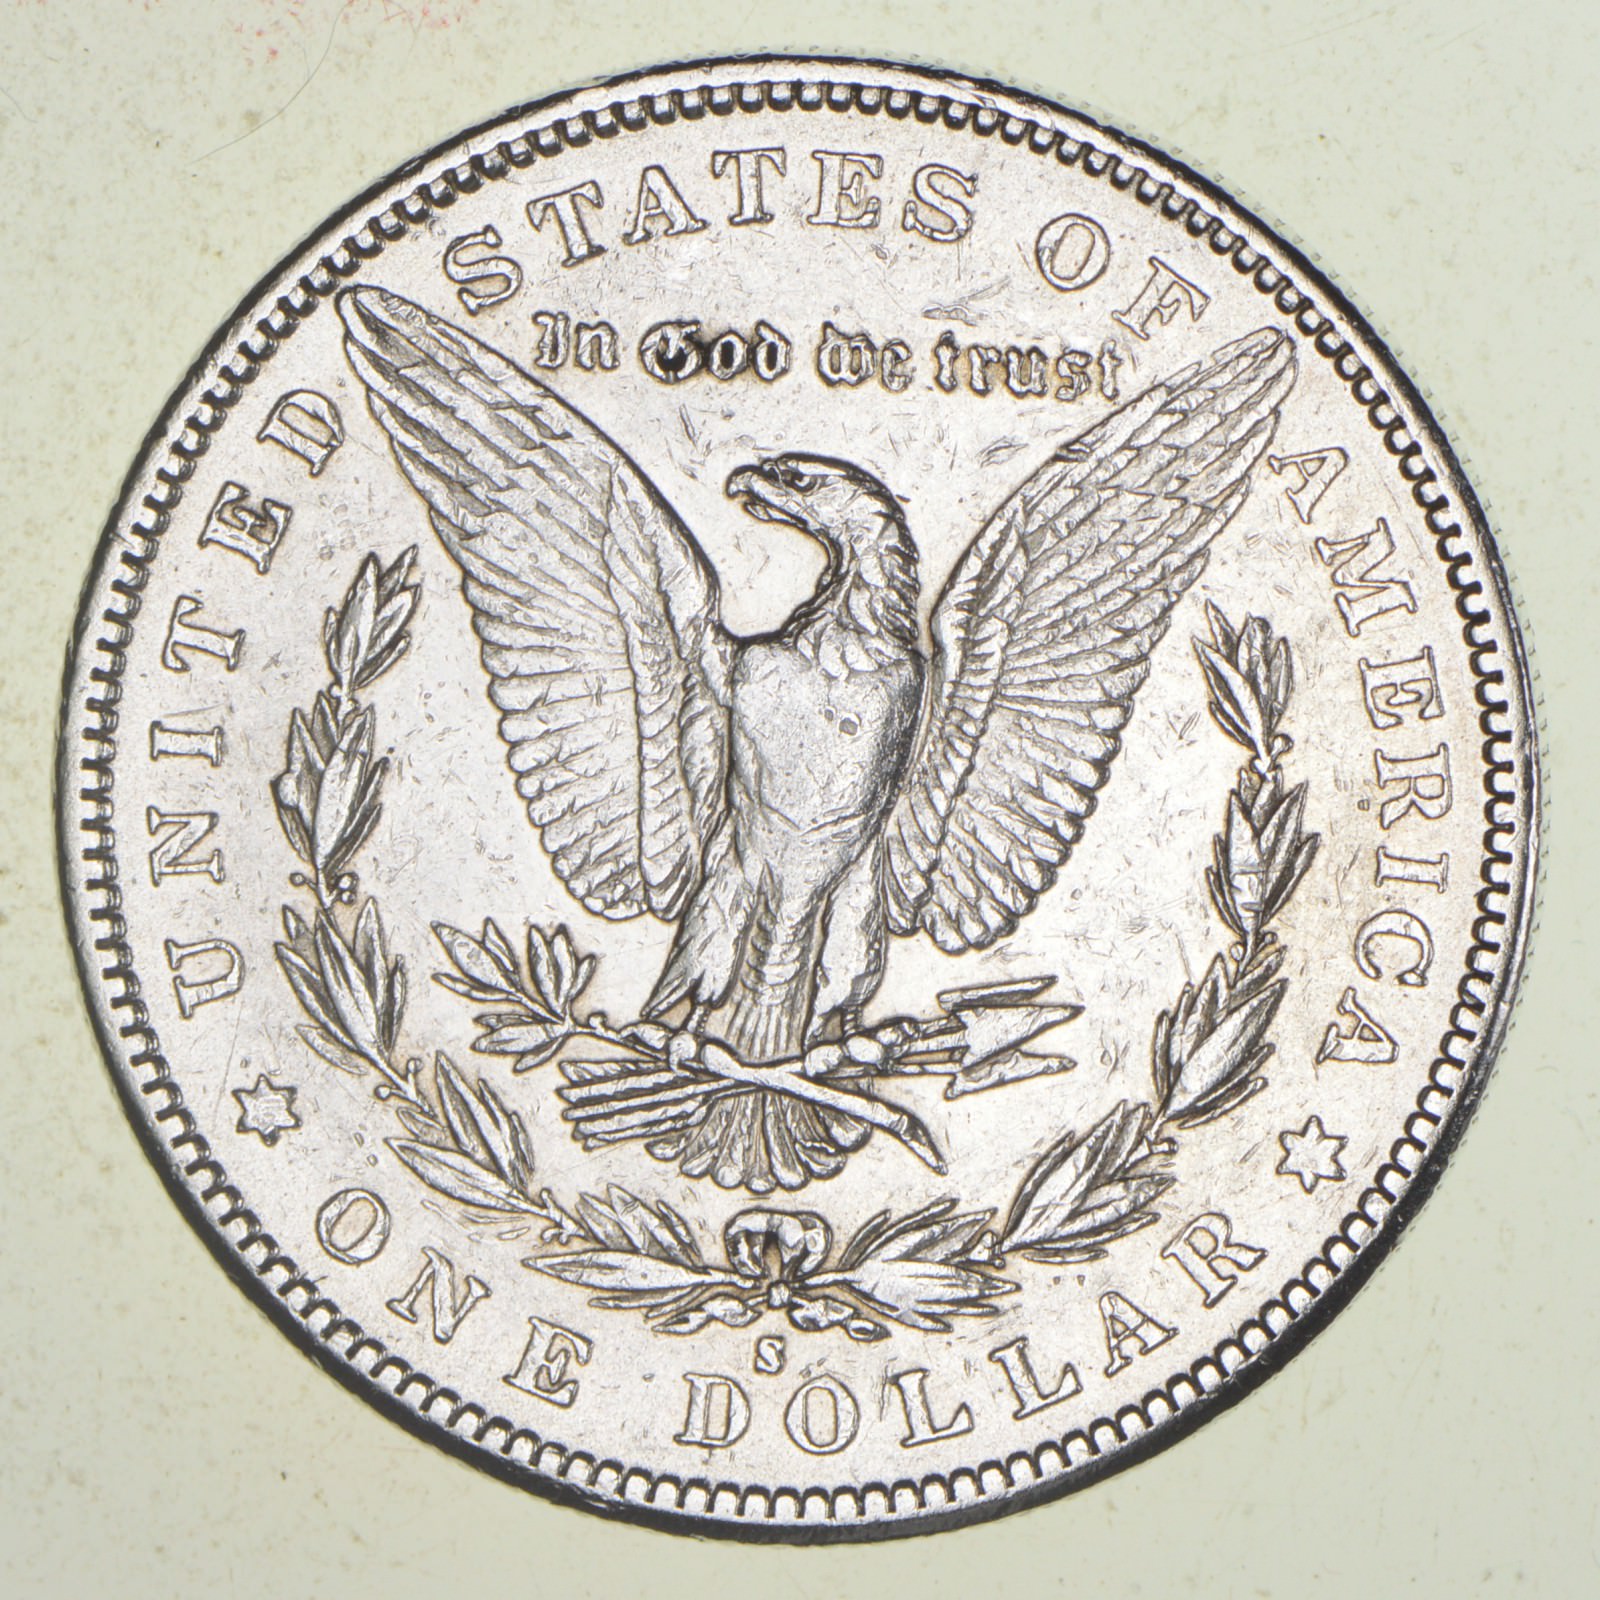 1884 silver dollar value chart